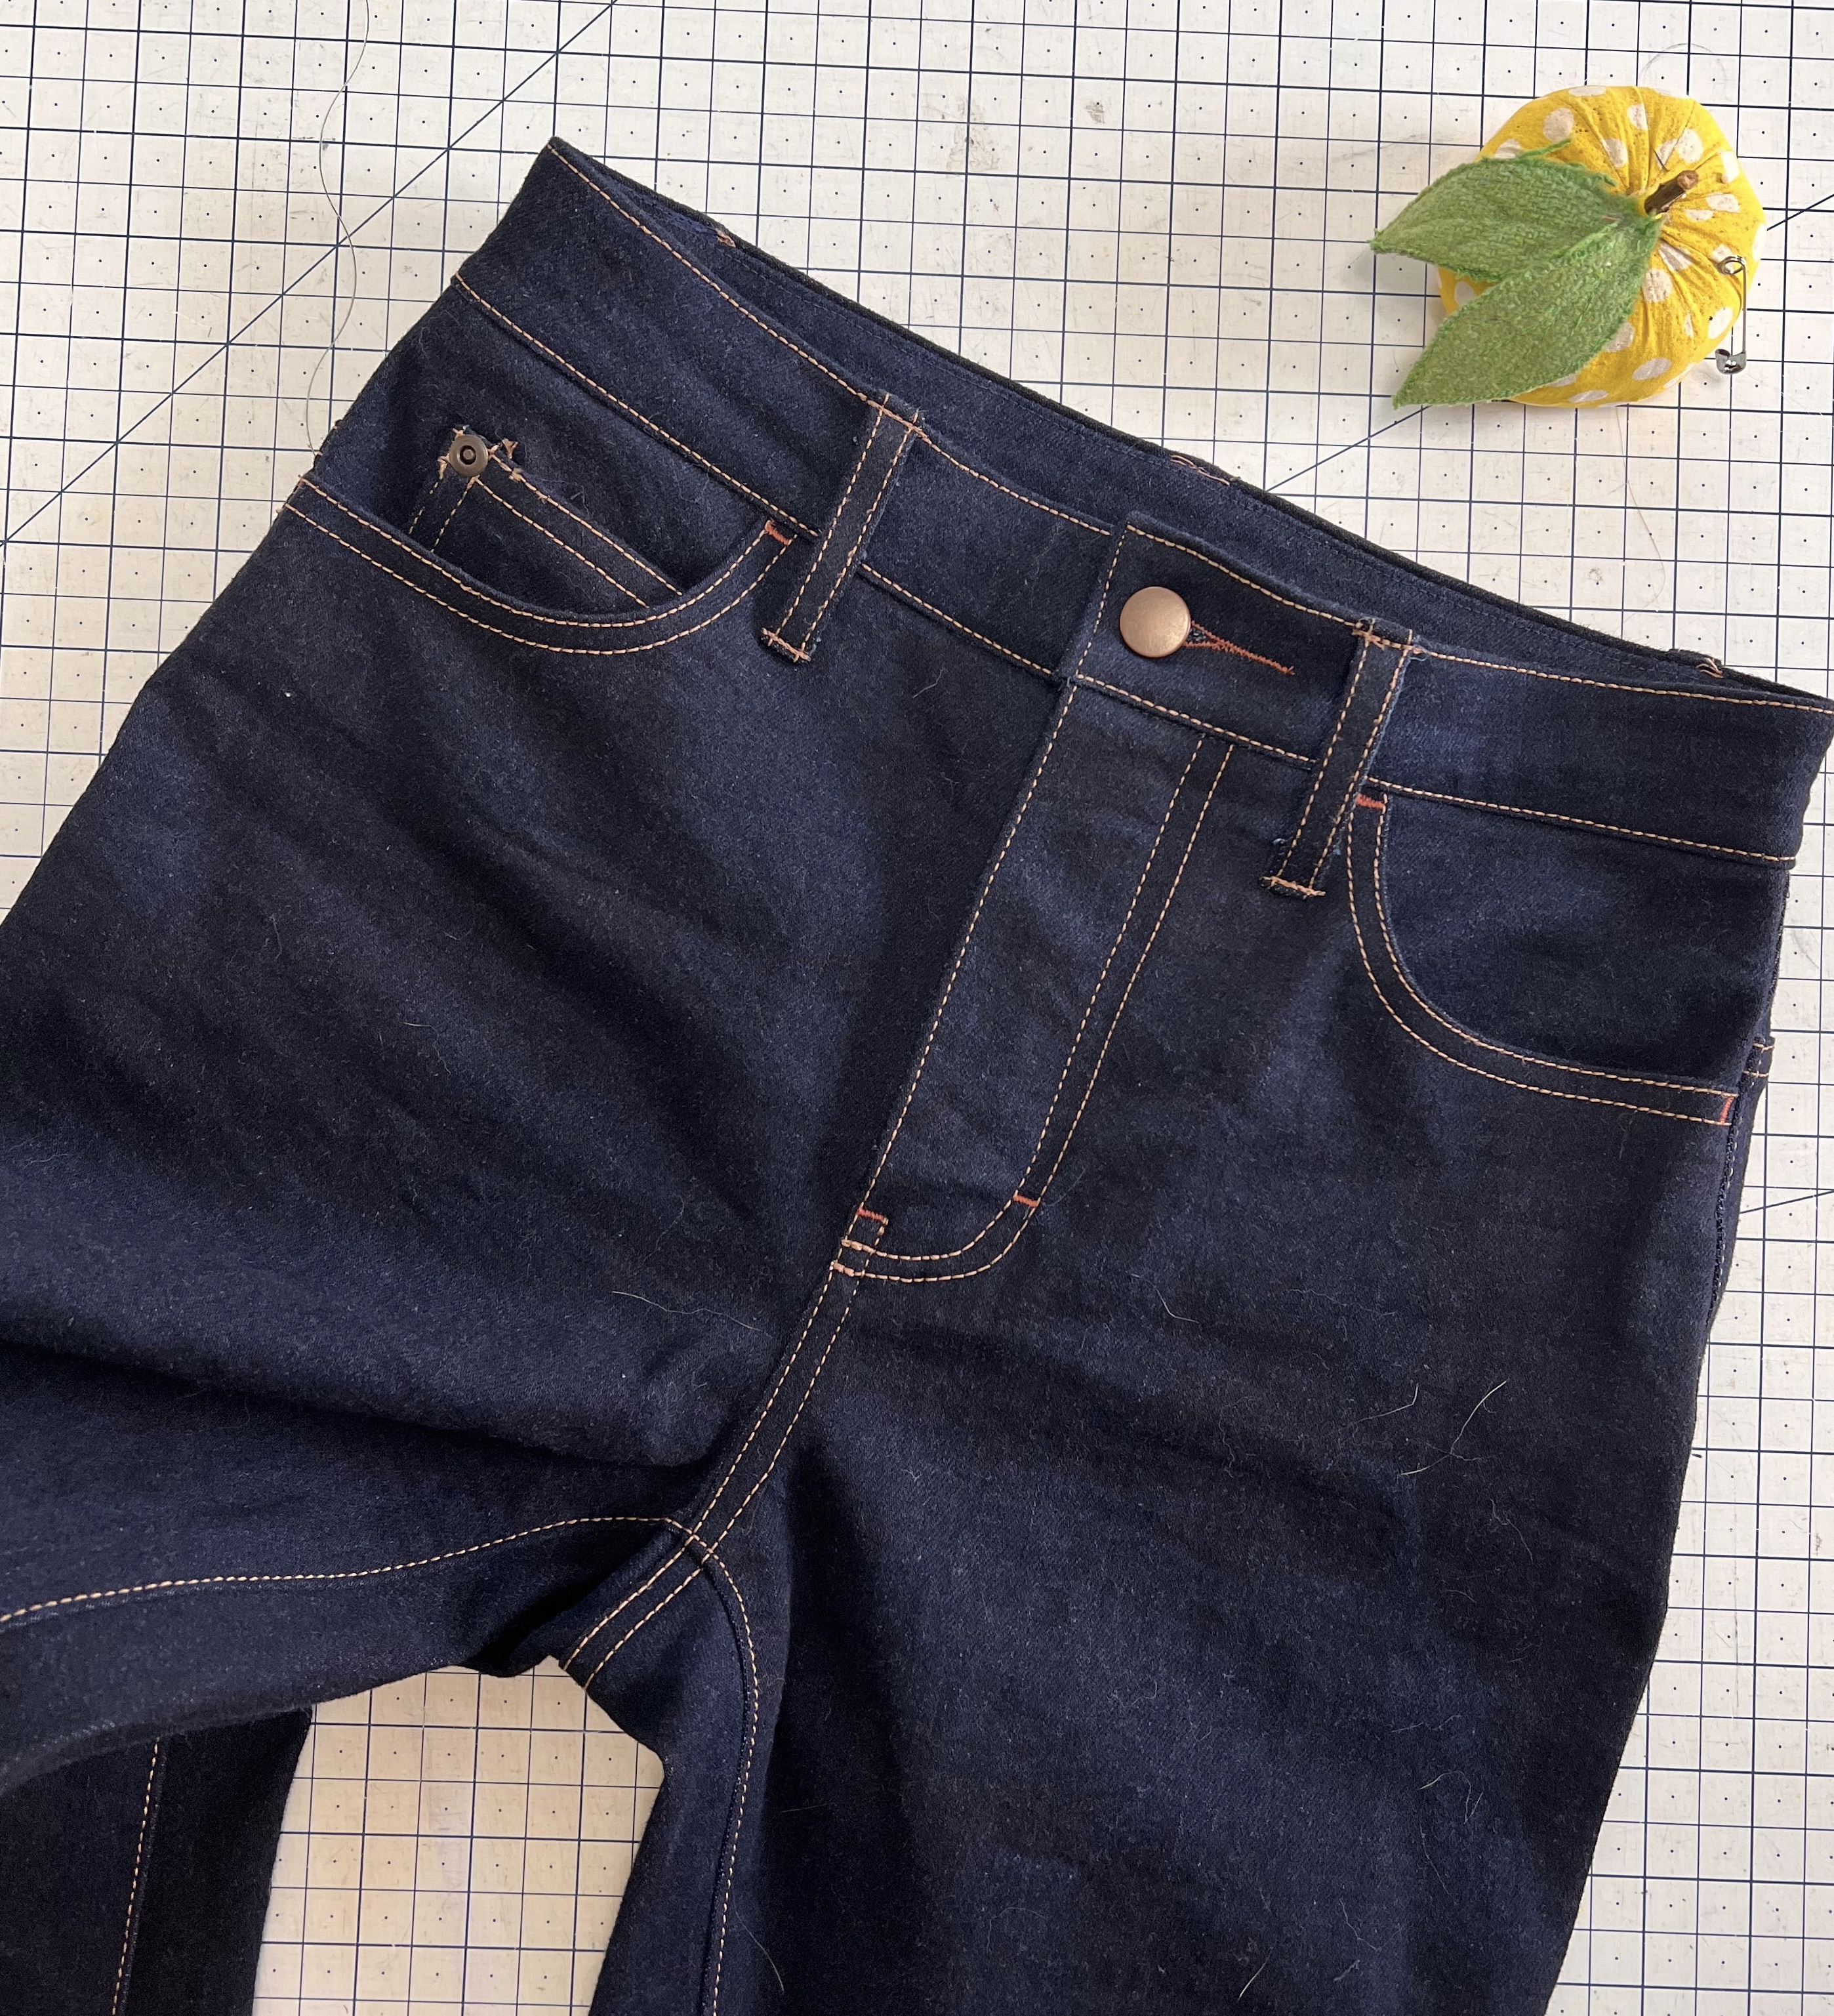 20 Free Topstitch Designs - Handmade Jeans Back Pockets - I AM Patterns